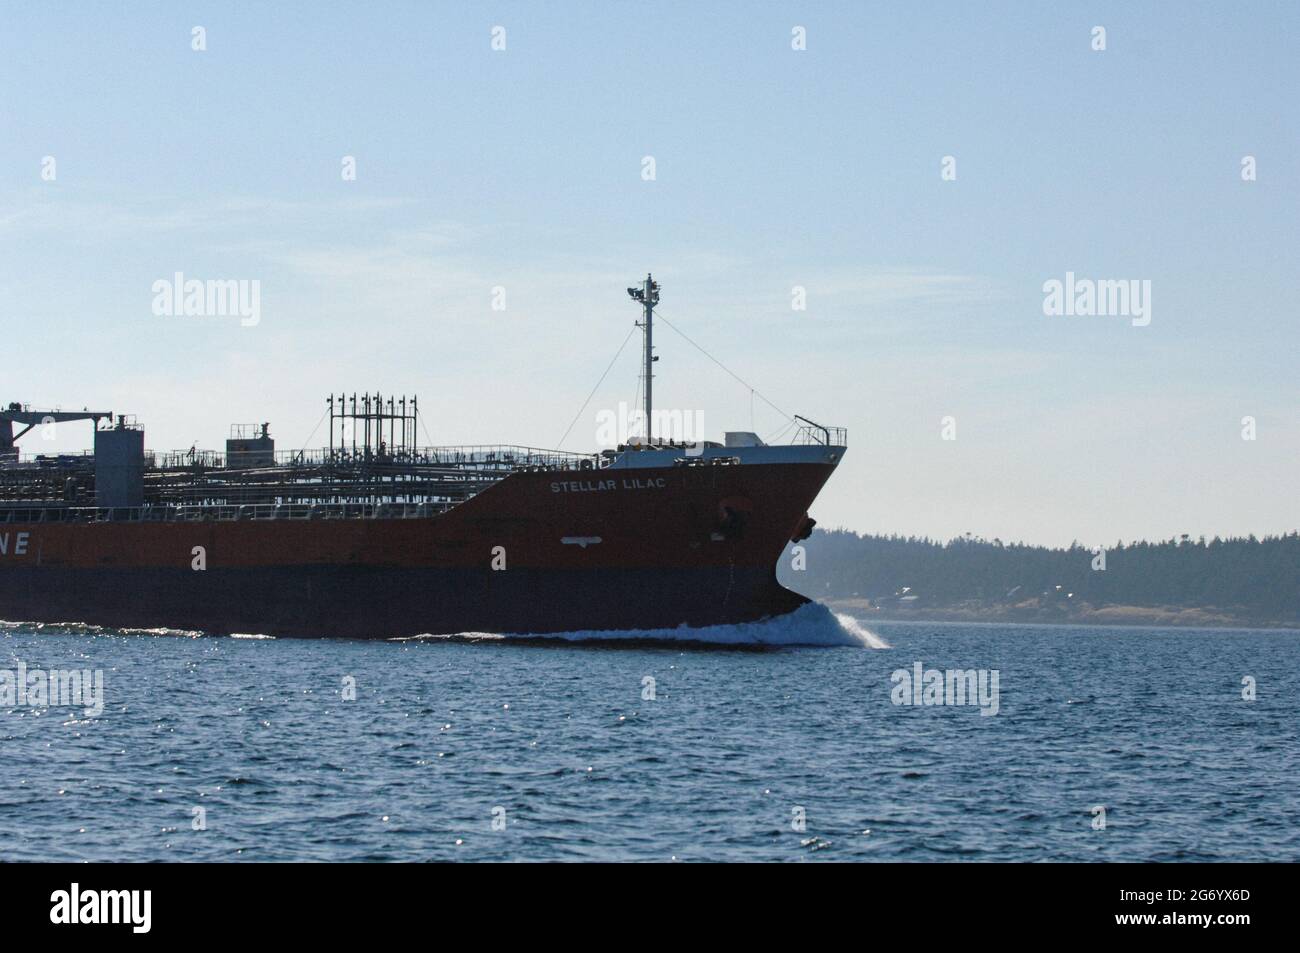 Transport ship Stellar Lilac under way Stock Photo